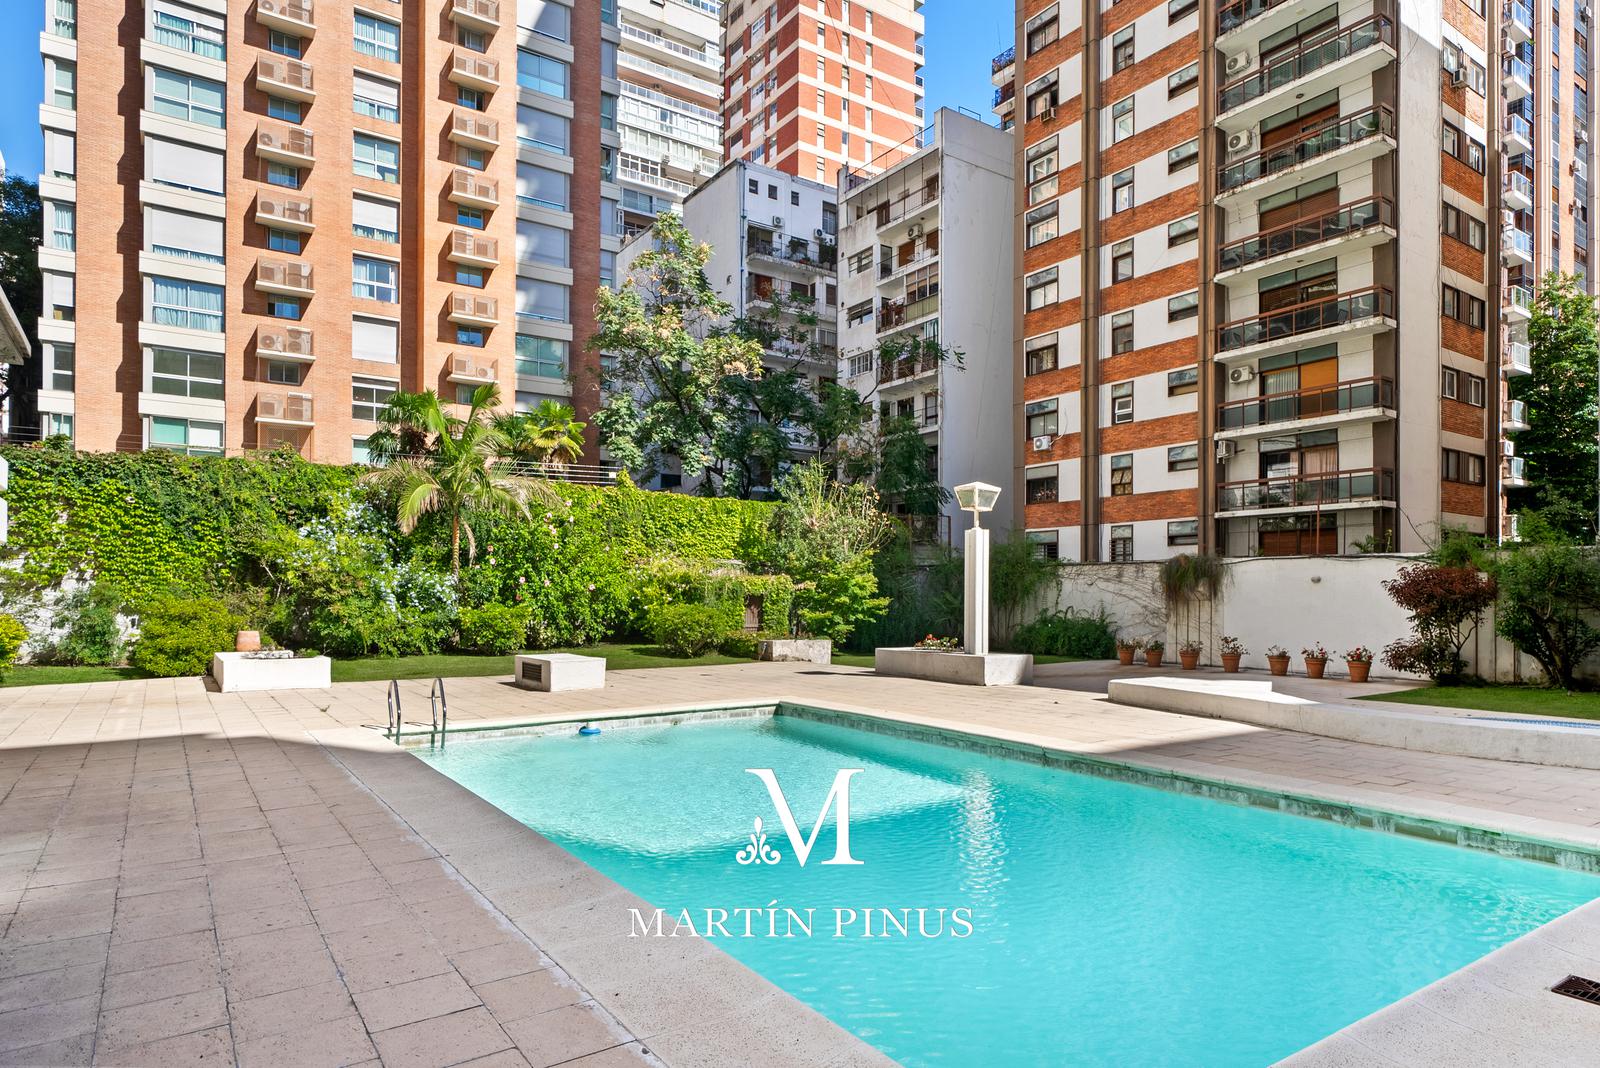 #5143882 | Sale | Apartment | Belgrano Barrancas (Martin Pinus)